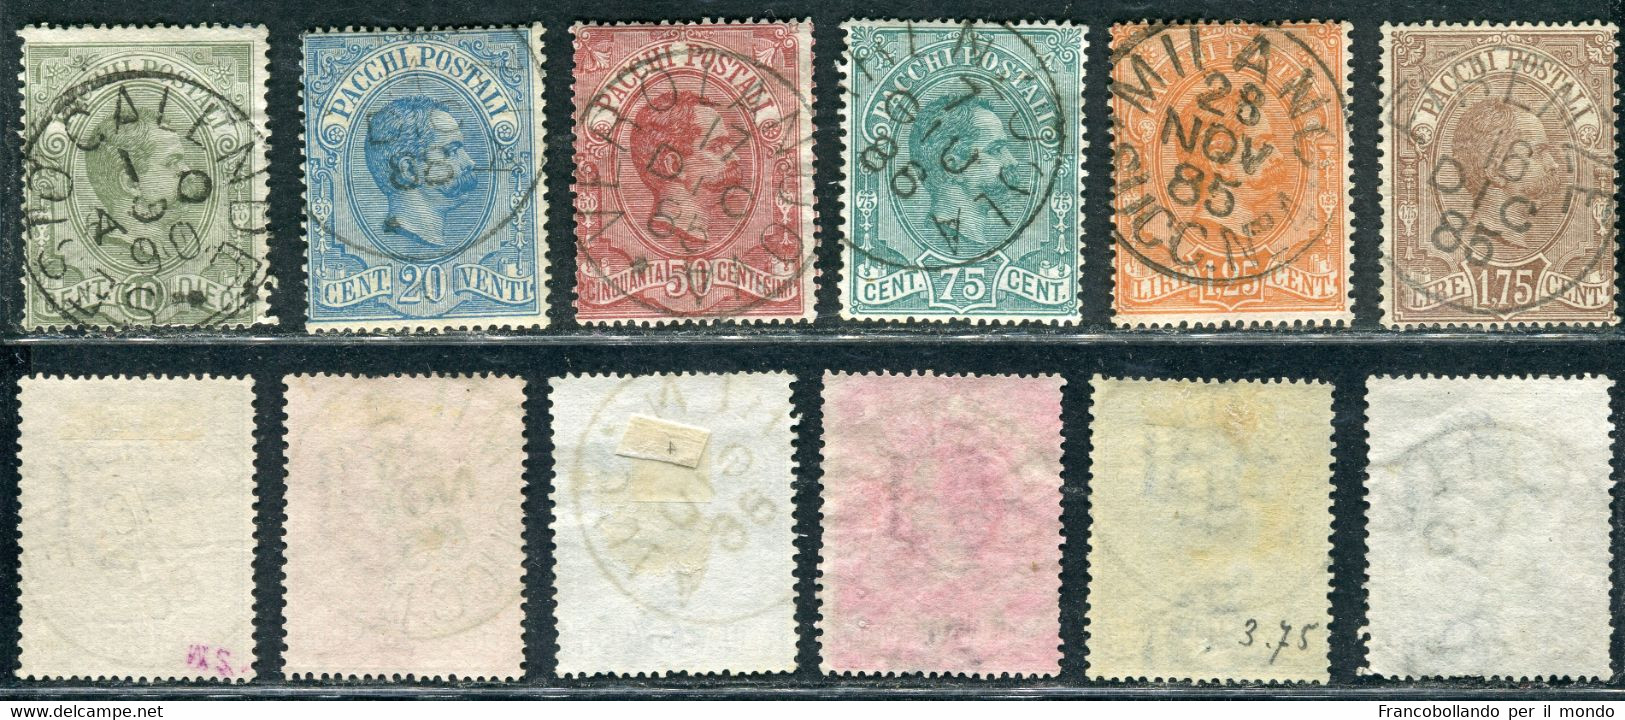 1884/86 Regno D'Italia Pacchi Postali Serie Completa N° S 2100 Usata - Postal Parcels